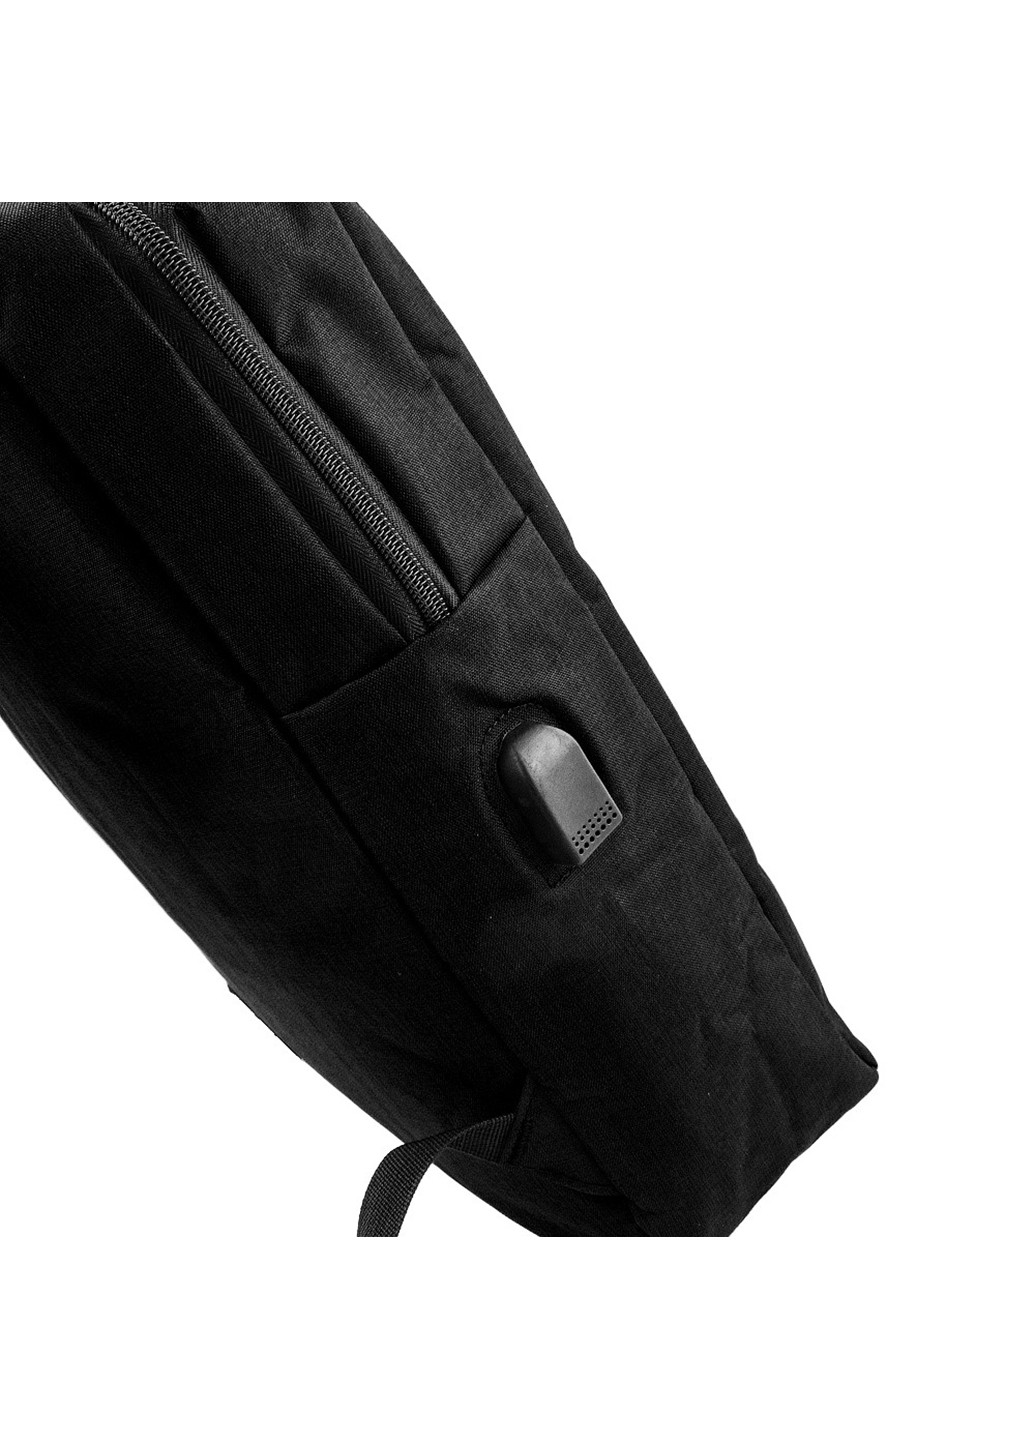 Мужской смарт-рюкзак 30х40х10 см Valiria Fashion (253027631)